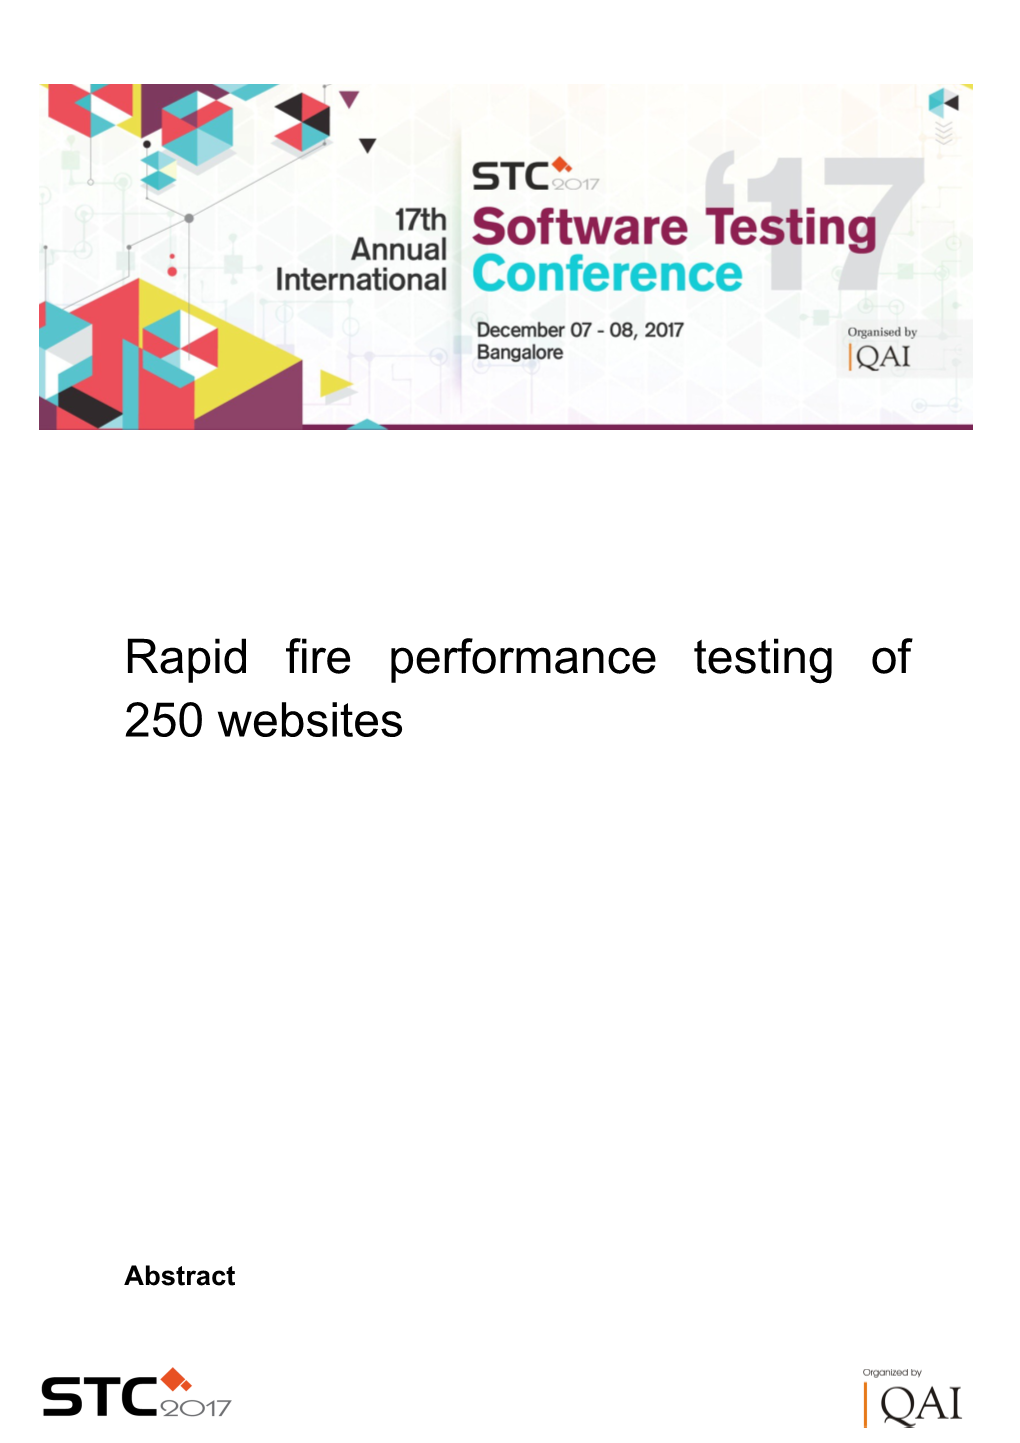 Rapid Fire Performance Testing of 250 Websites